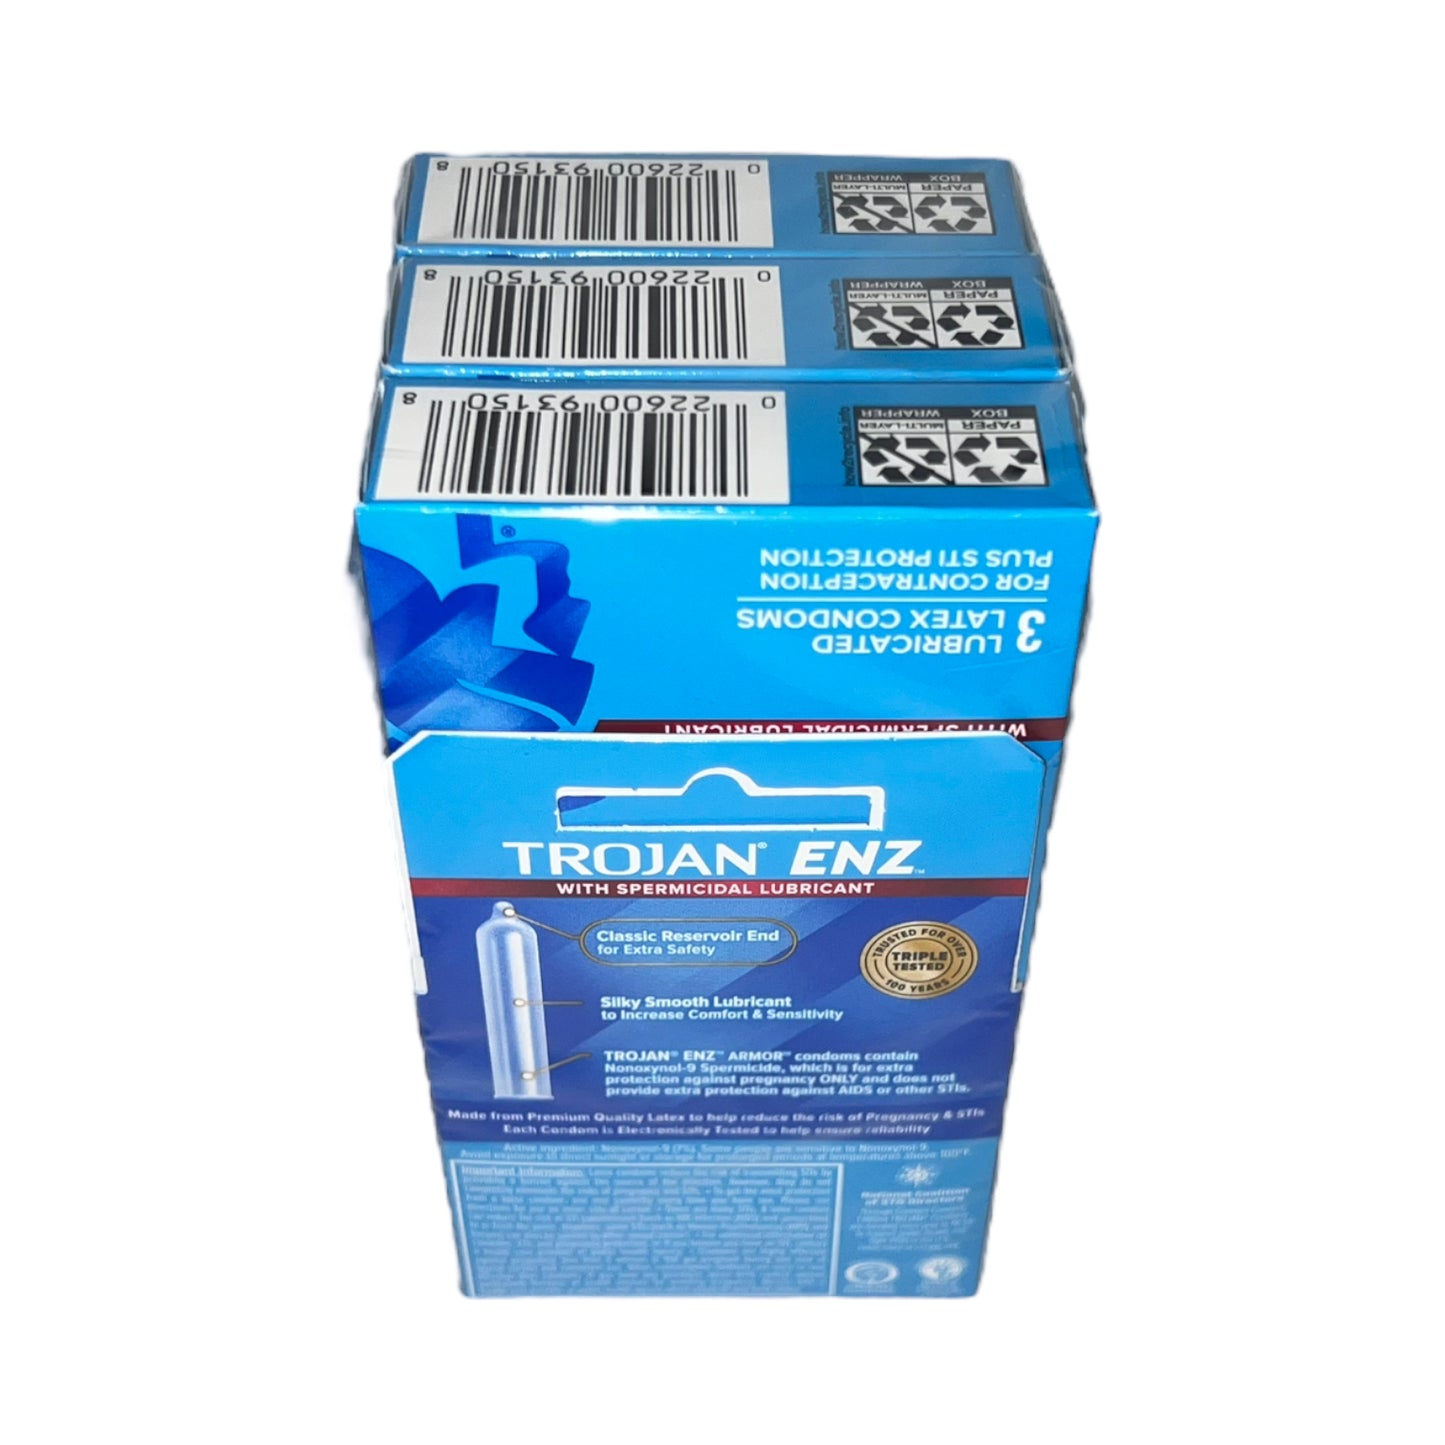 Trojan Enz Condoms 6 Packs of 3